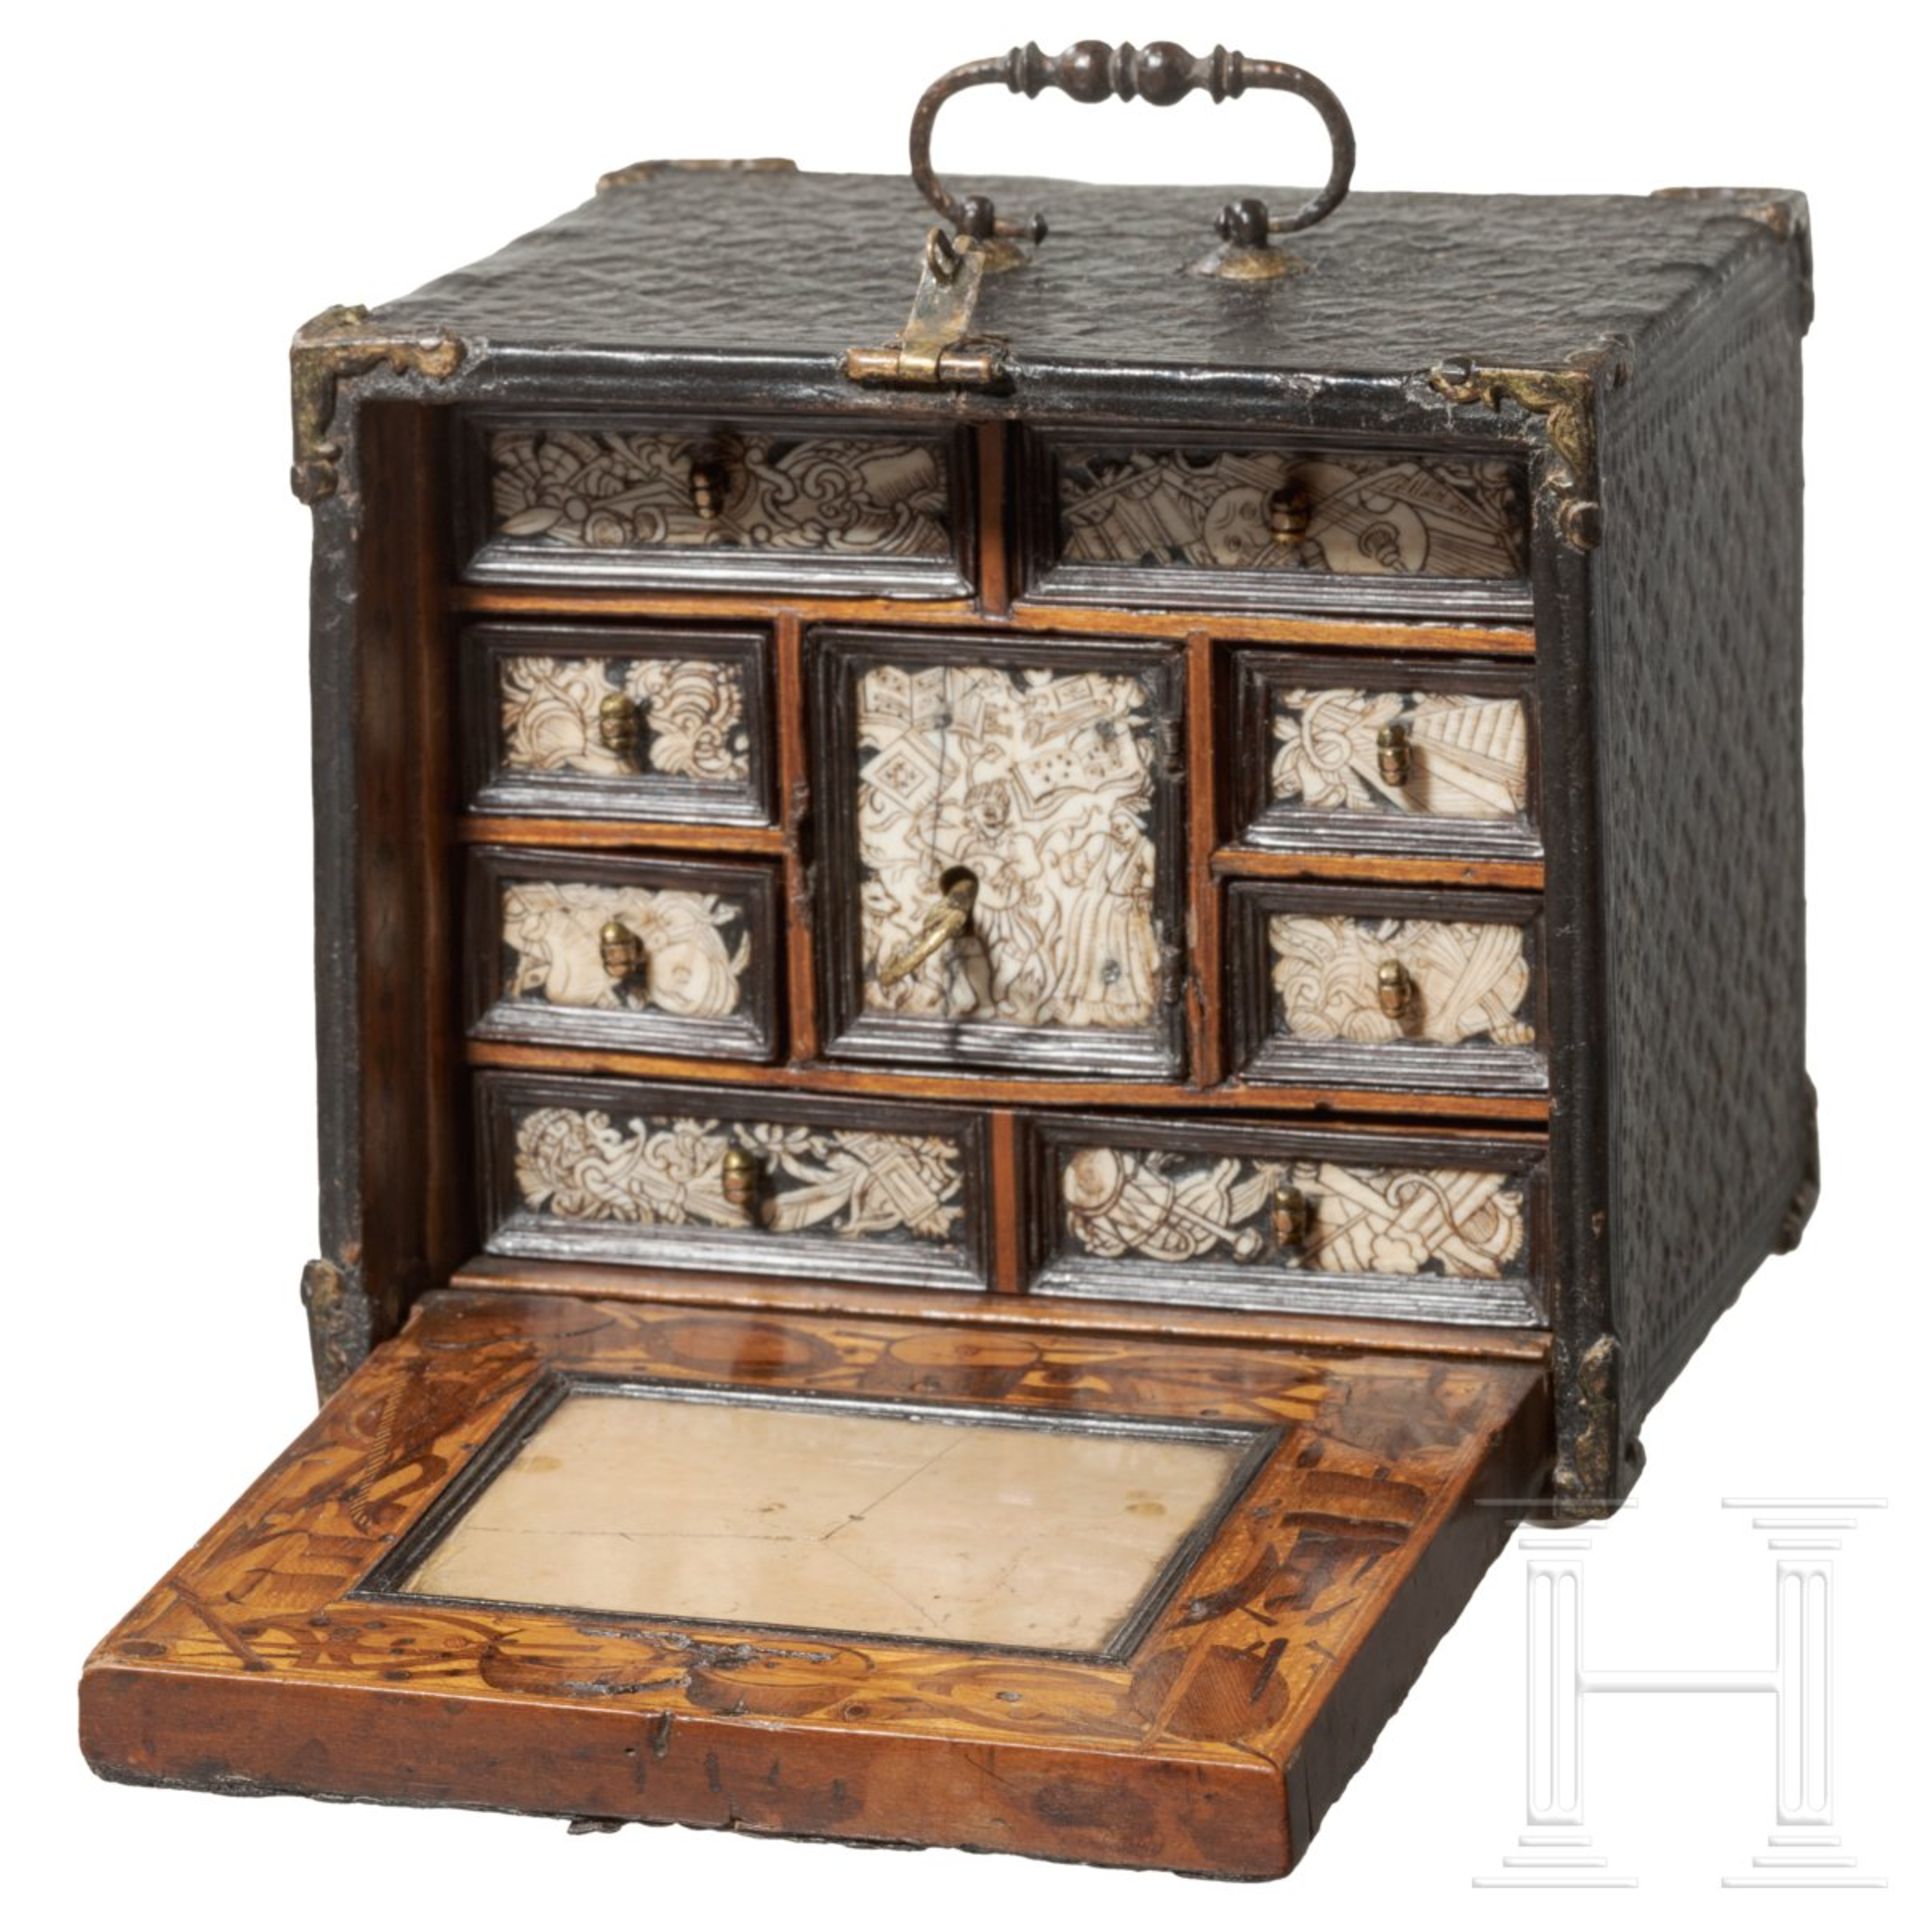 Lederbezogenes Miniatur-Kabinett, wohl Nürnberg, um 1600 - Bild 2 aus 9